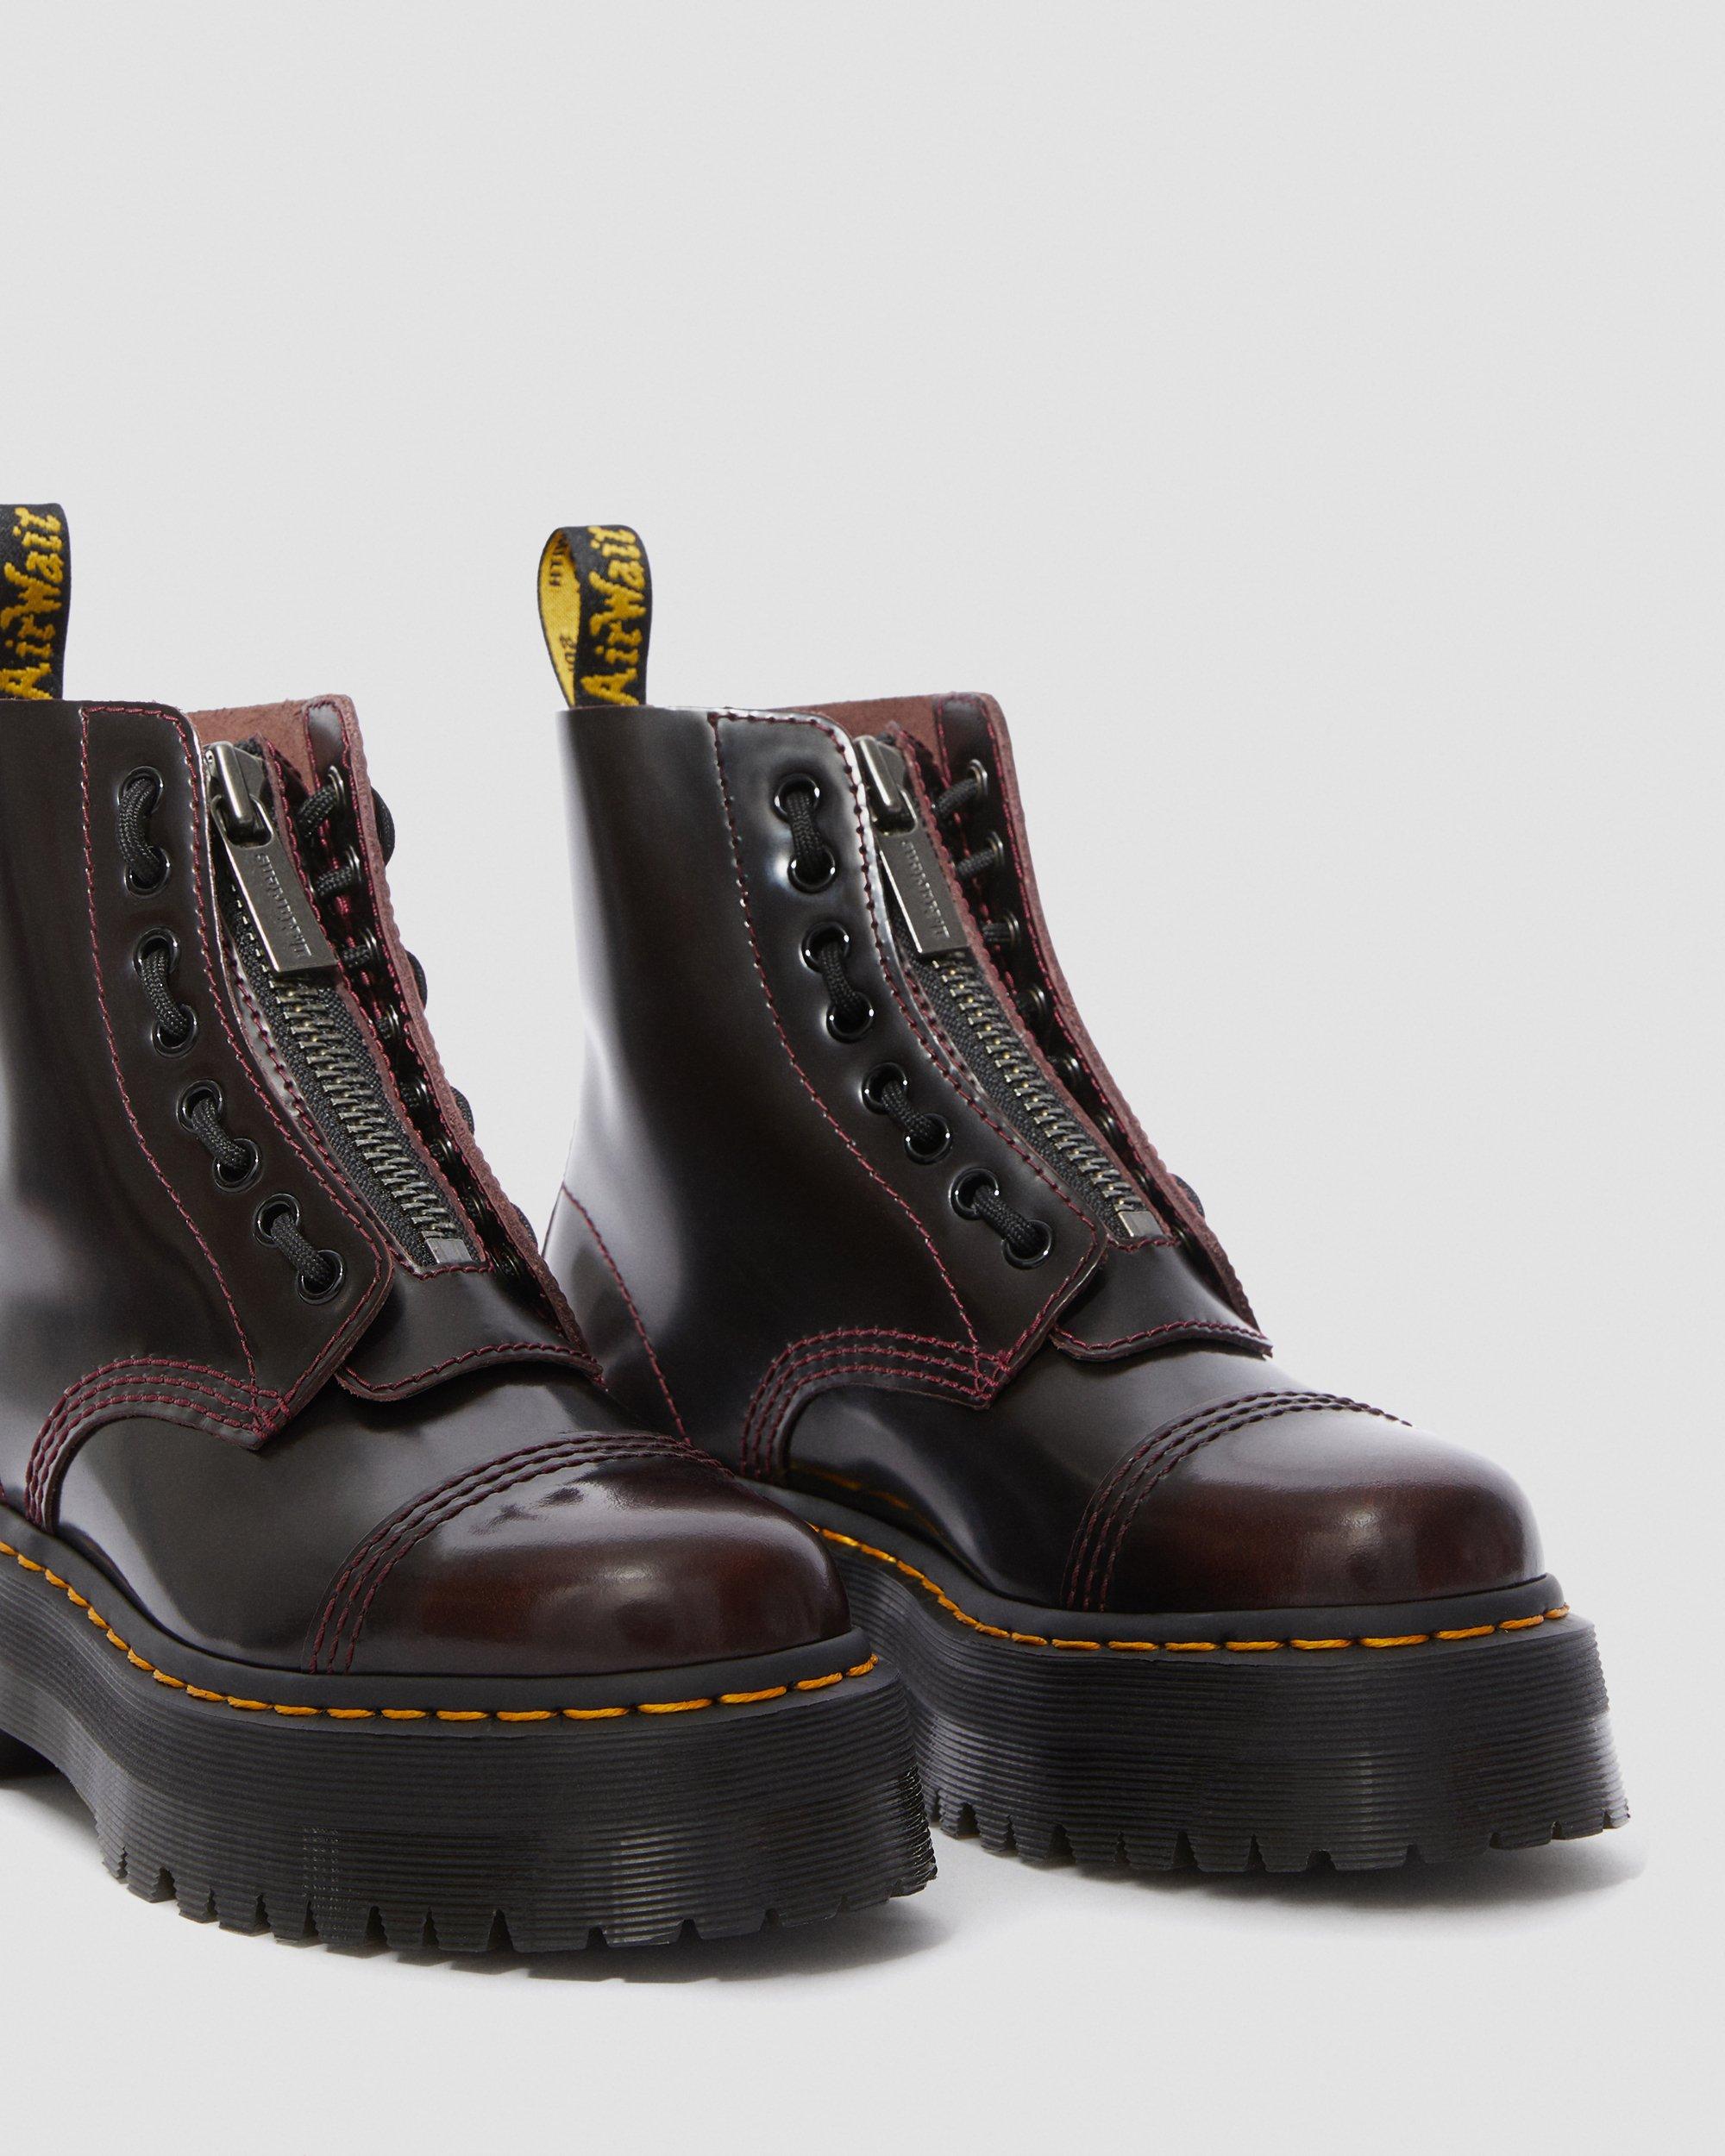 Sinclair Arcadia Platform Boots, Cherry Red | Dr. Martens